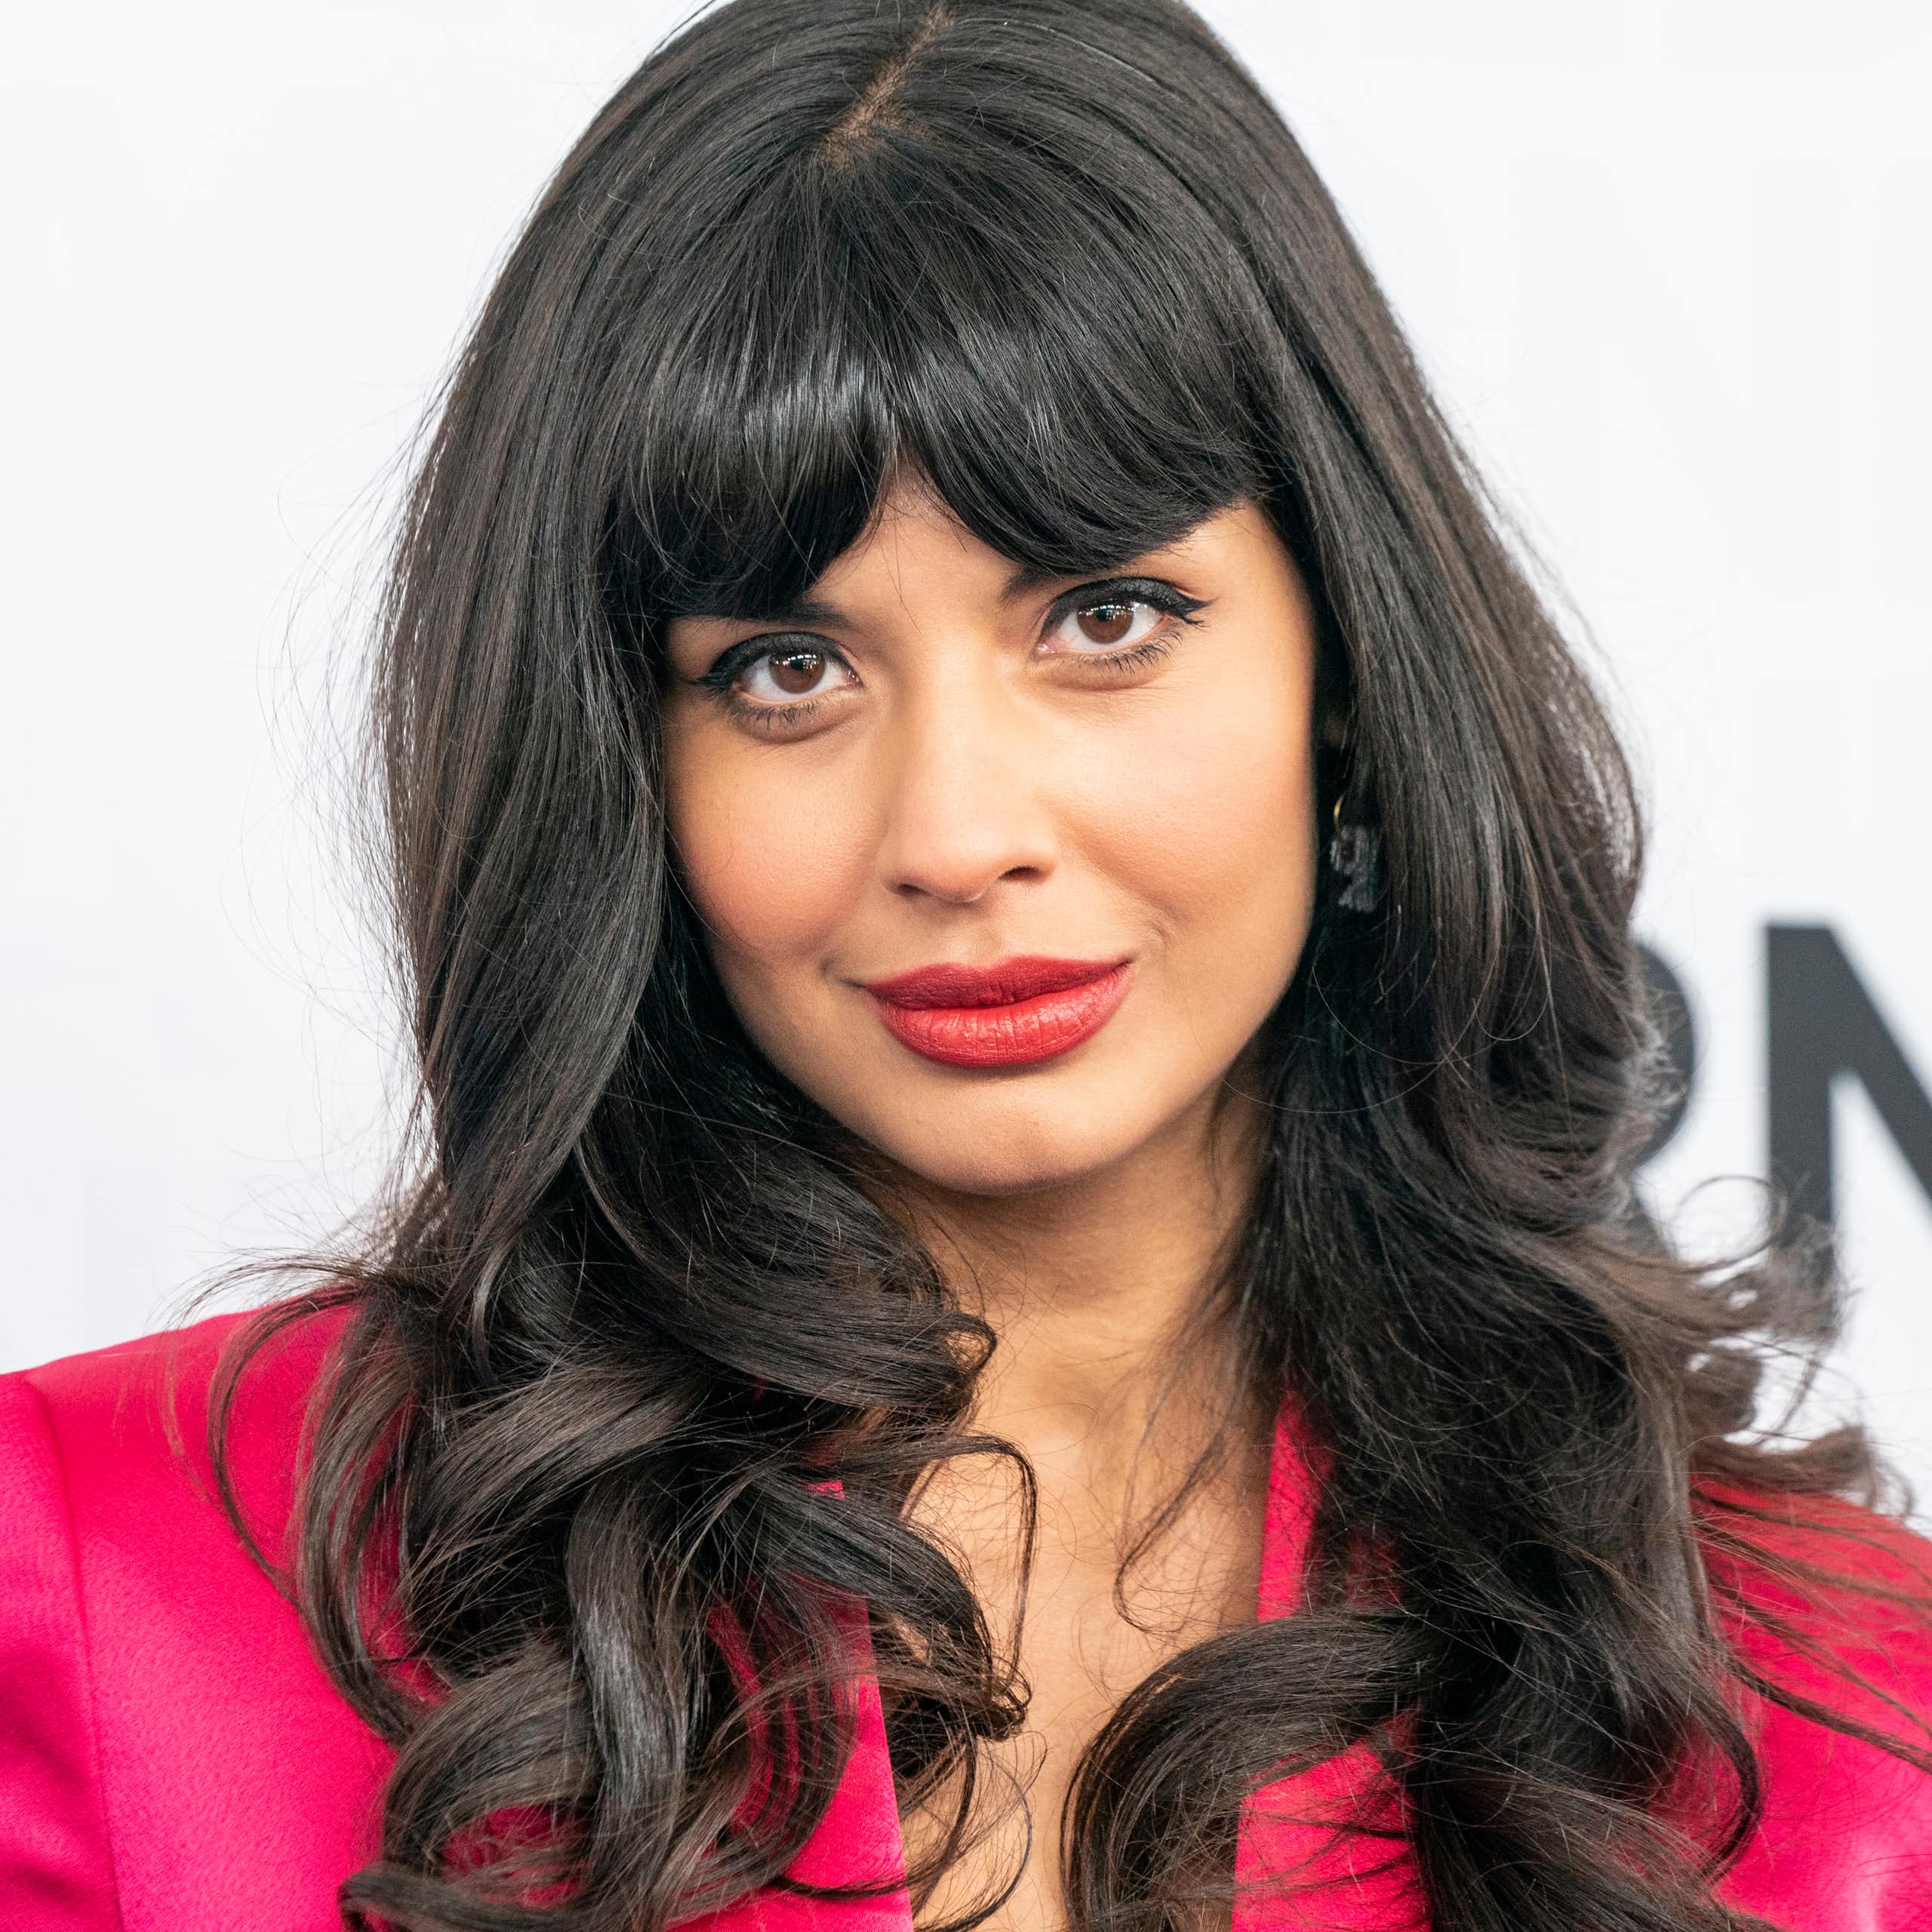 Actress Jameela Jamil poses on a red carpet.